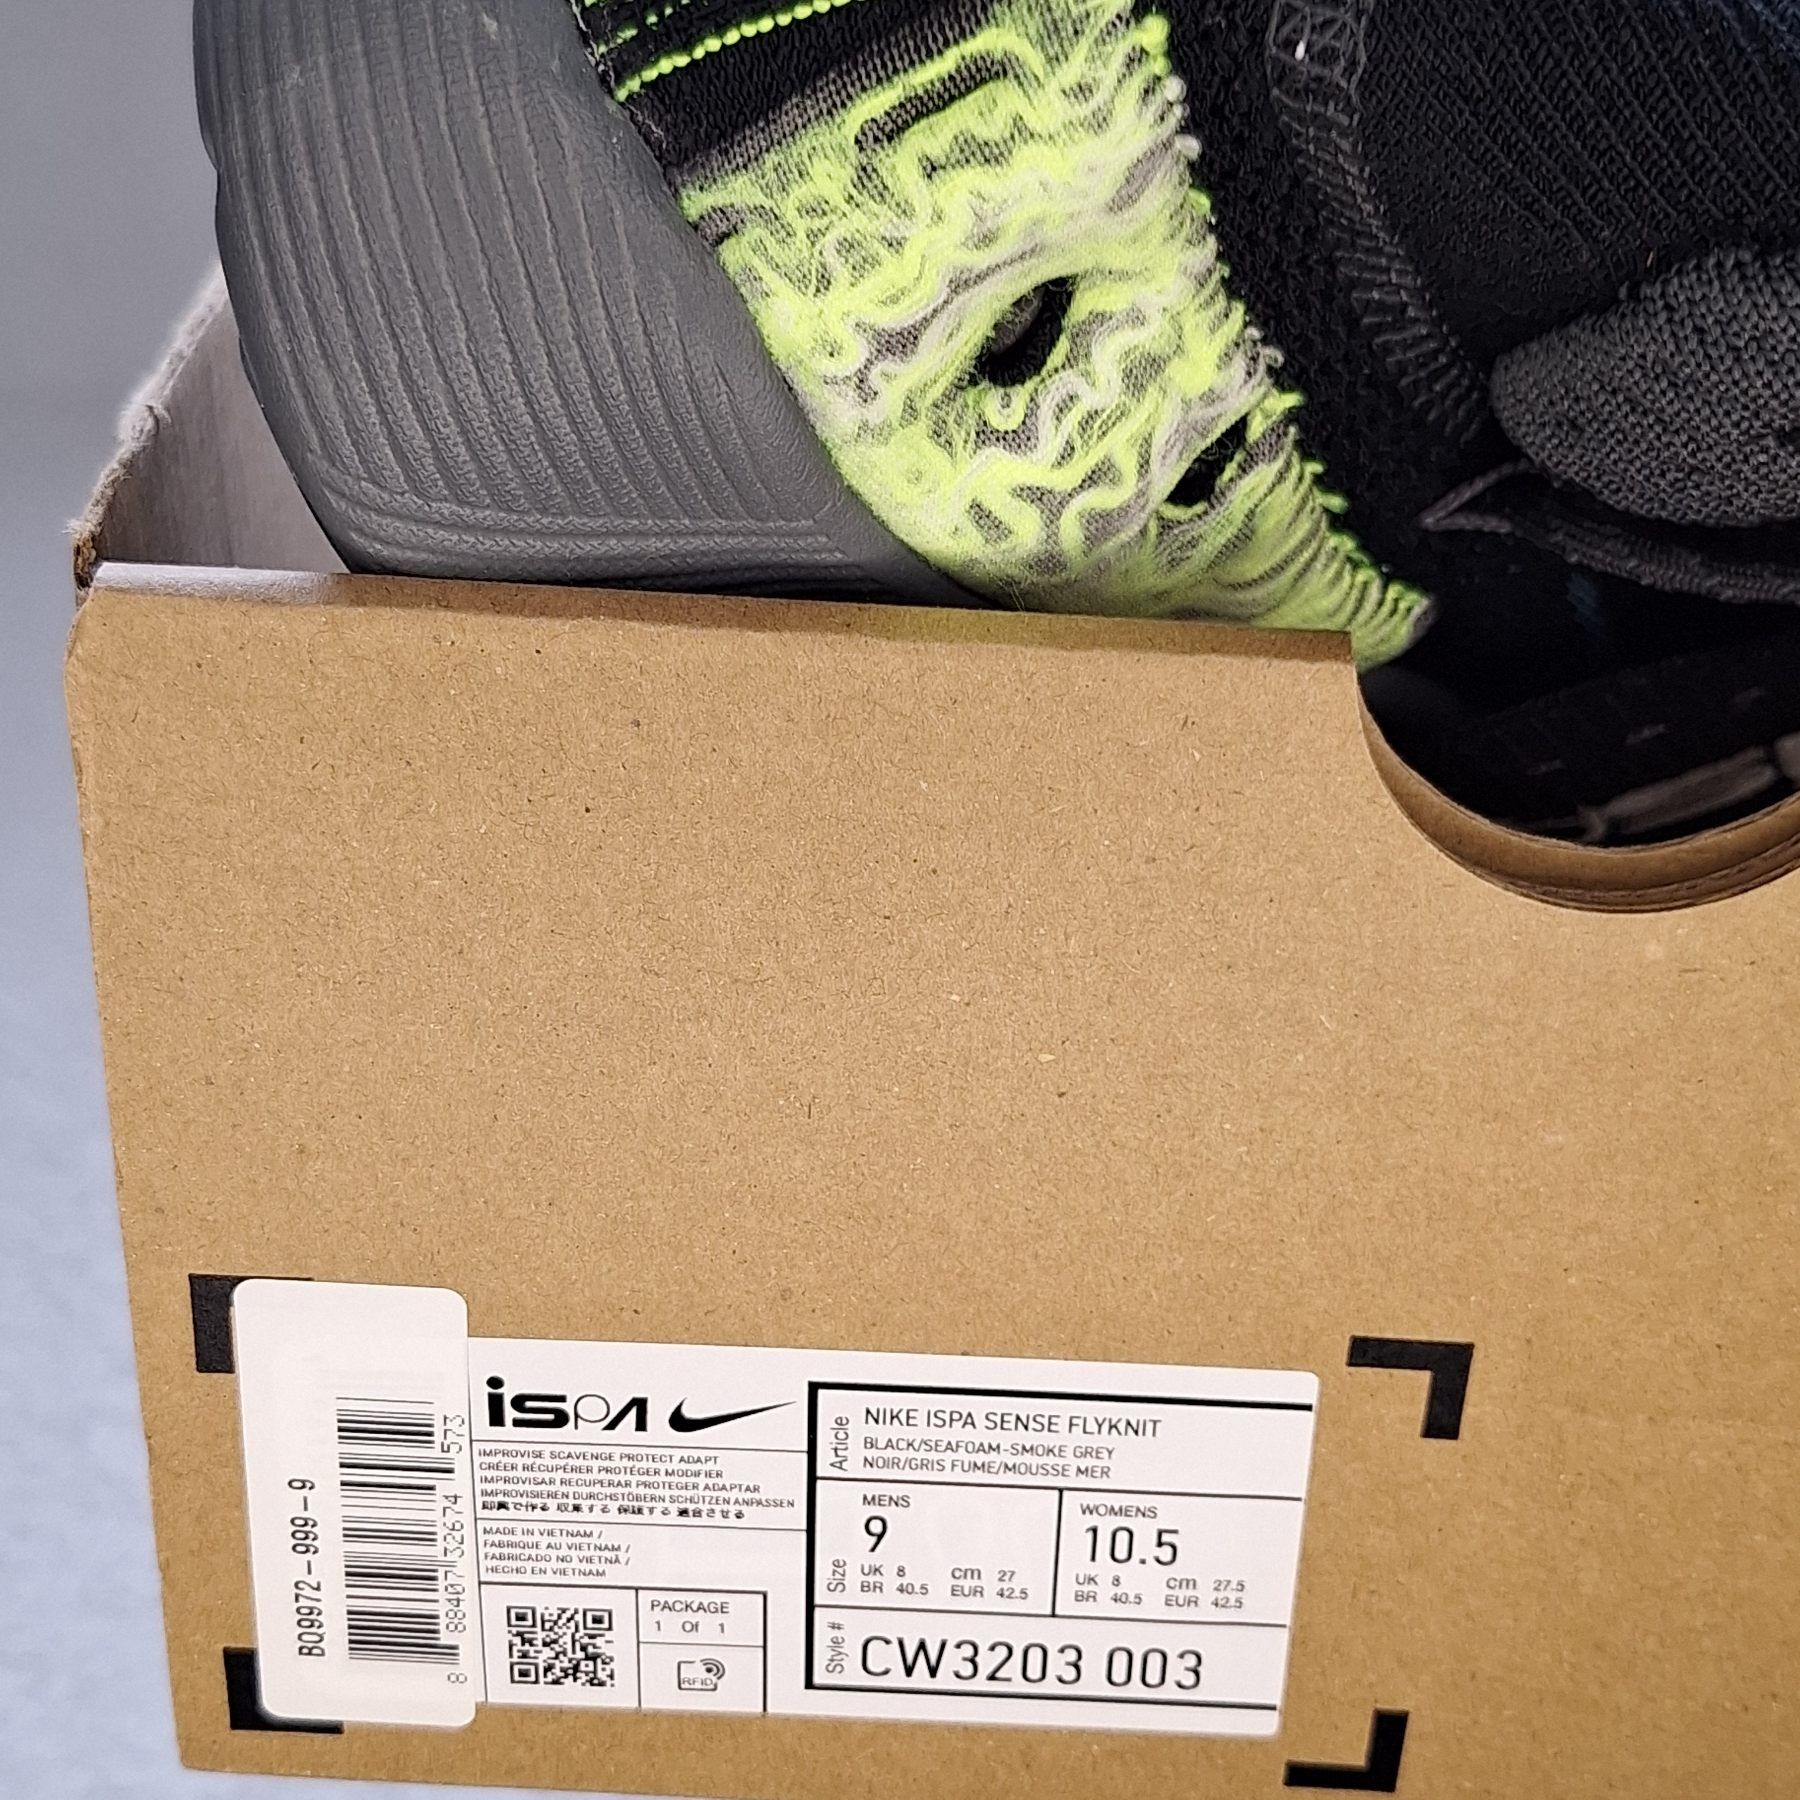 Кросівки Nike Ispa sense fly knit US9.5 cw3203 300 розмір 43